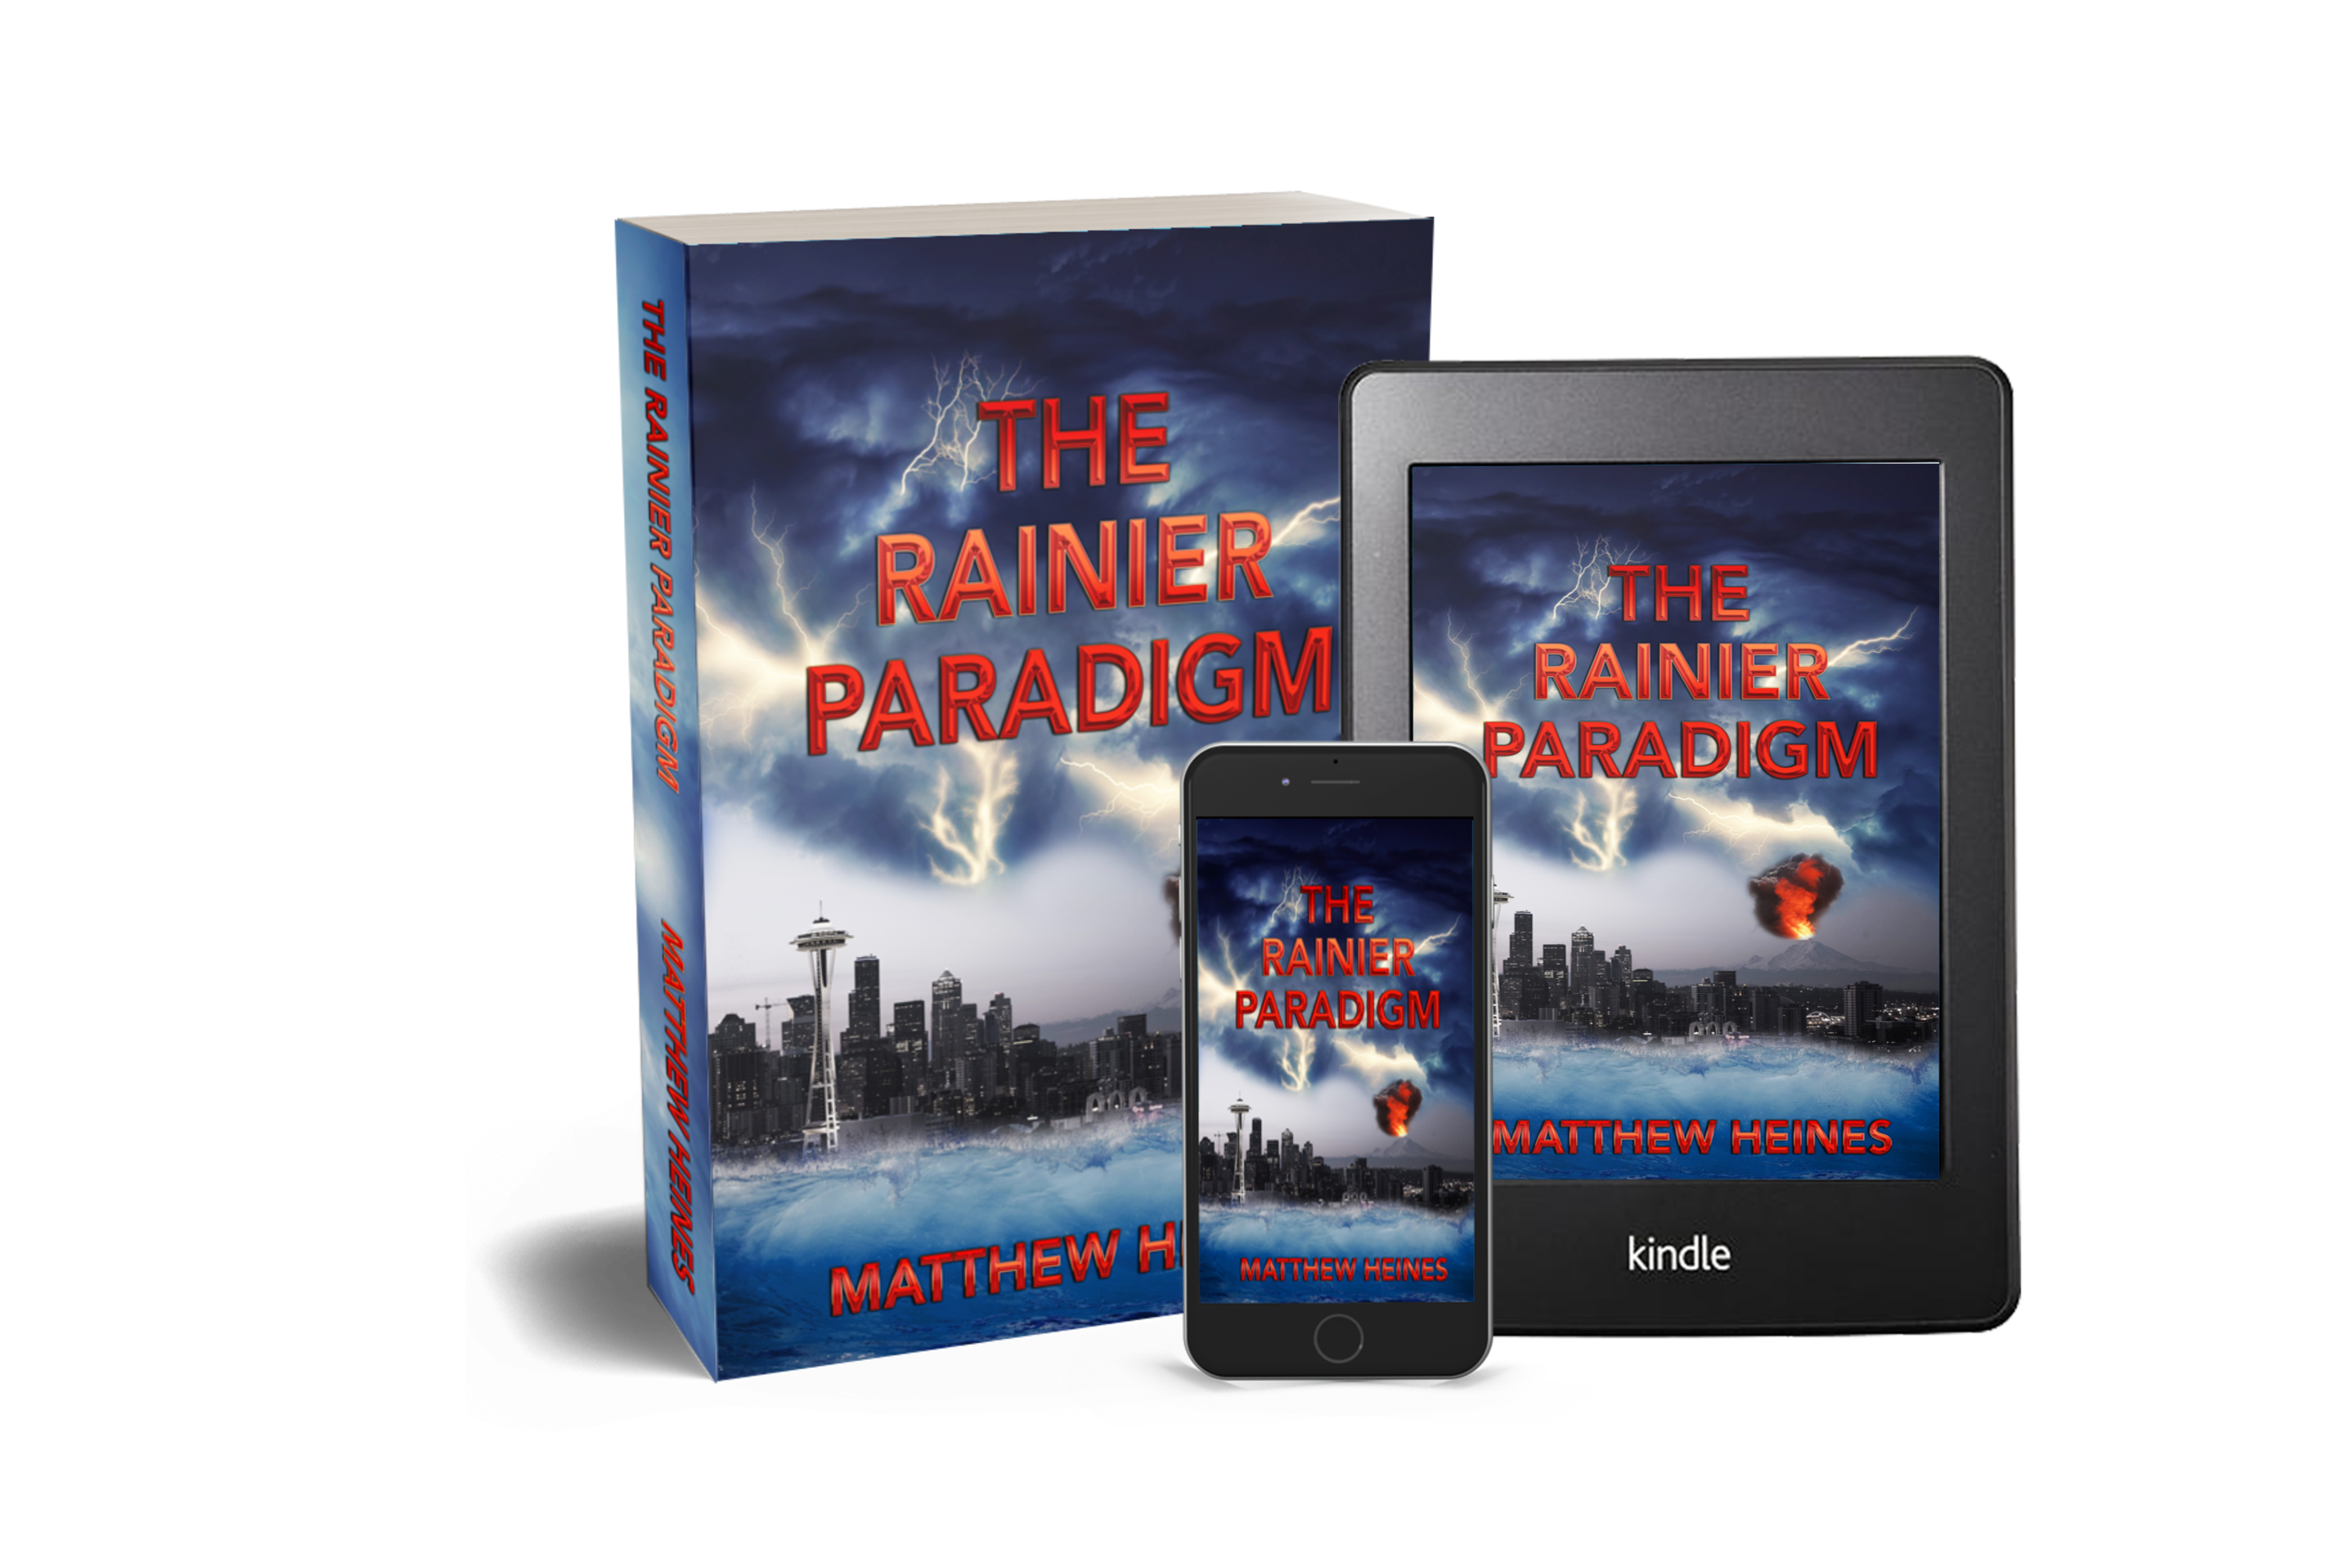 The Rainier Paradigm Paperback iPhone Kindle